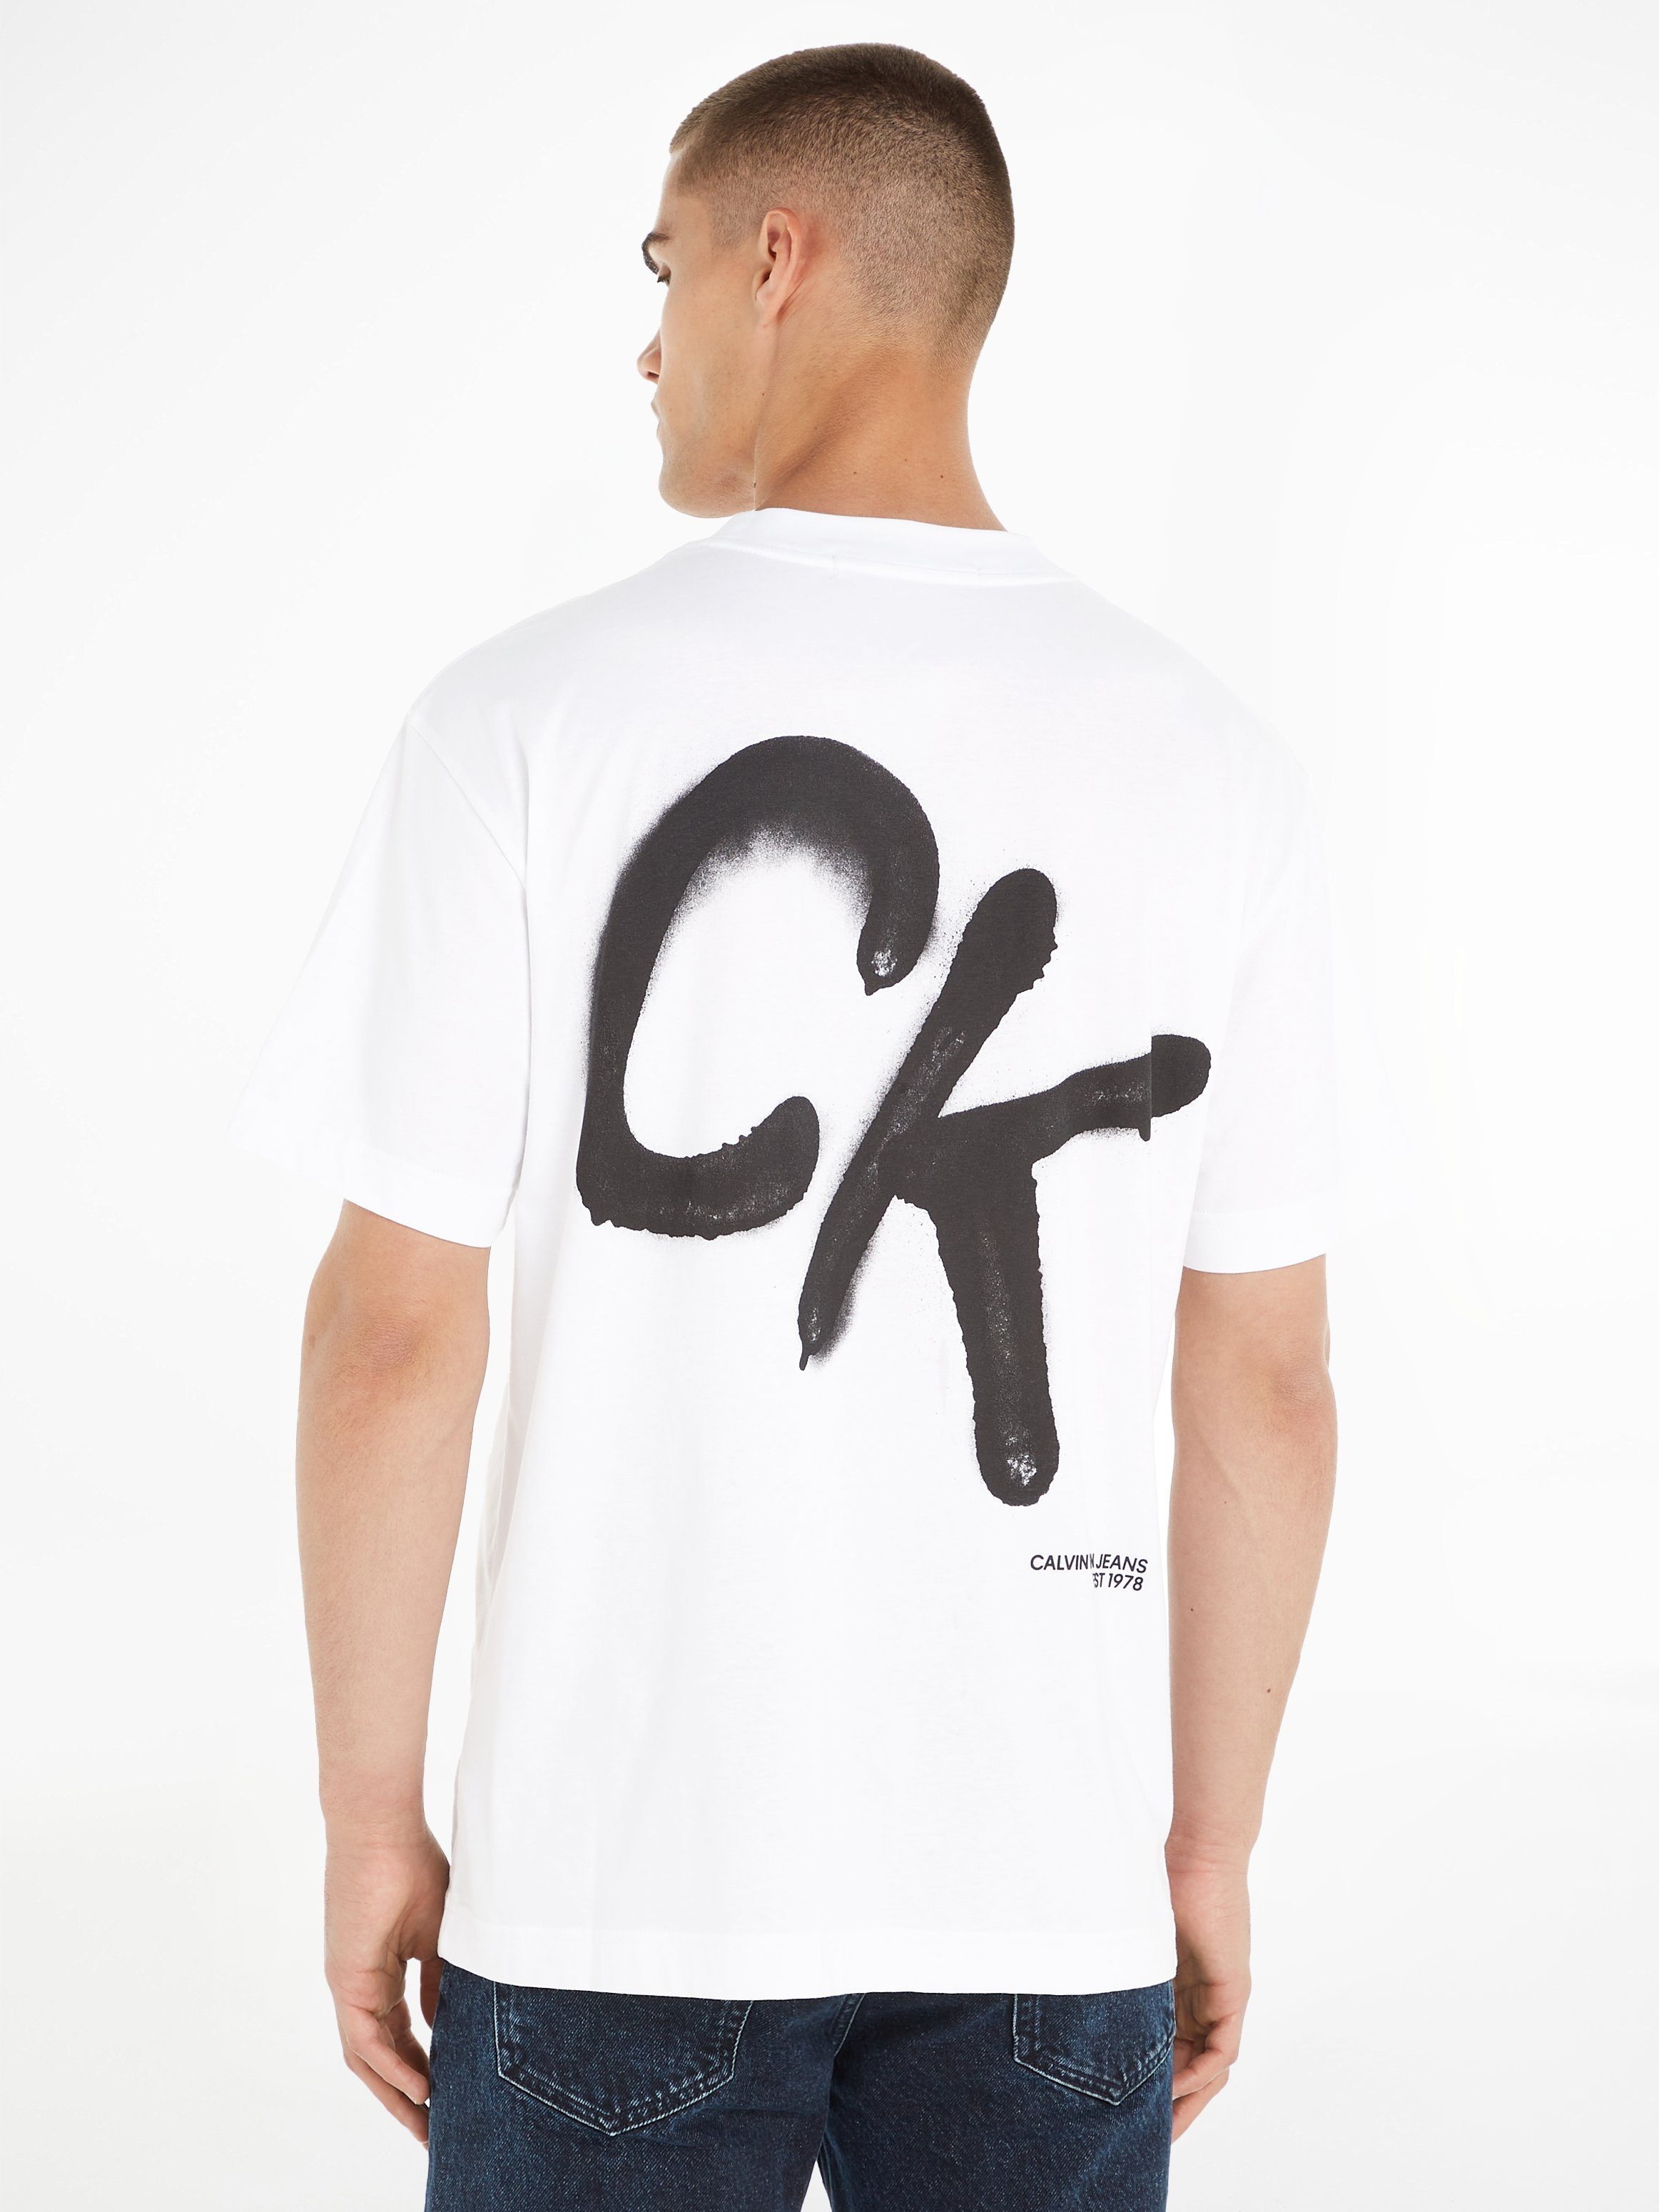 Calvin Klein Jeans TEE T-Shirt Bright White SPRAY CK